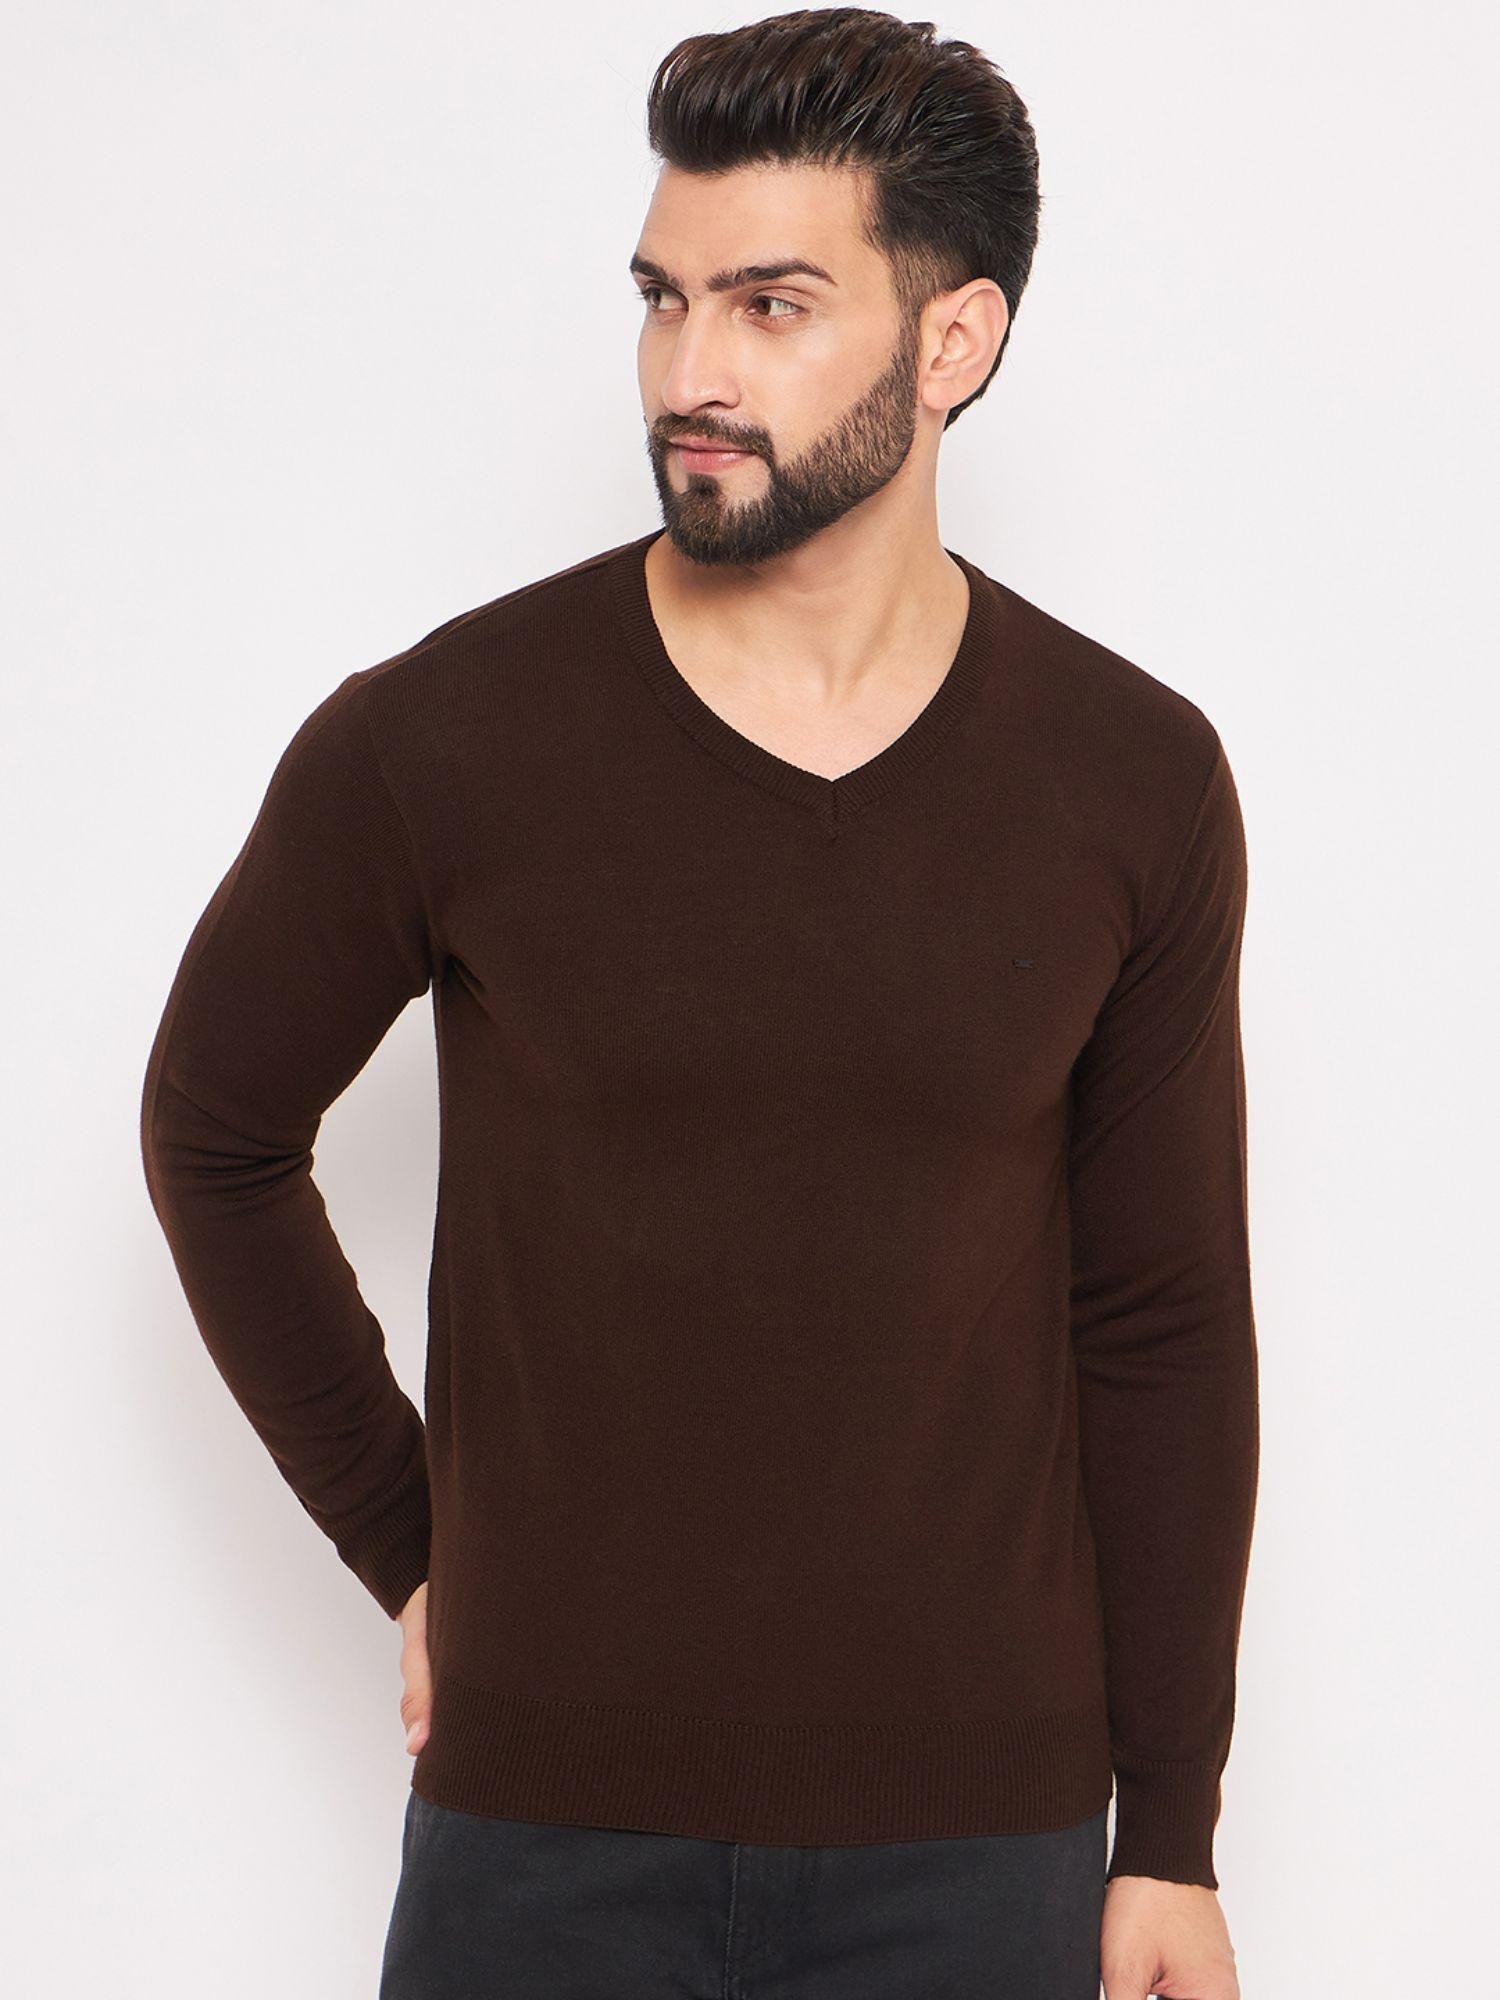 mens-solid-acryclic-v-neck-sweater